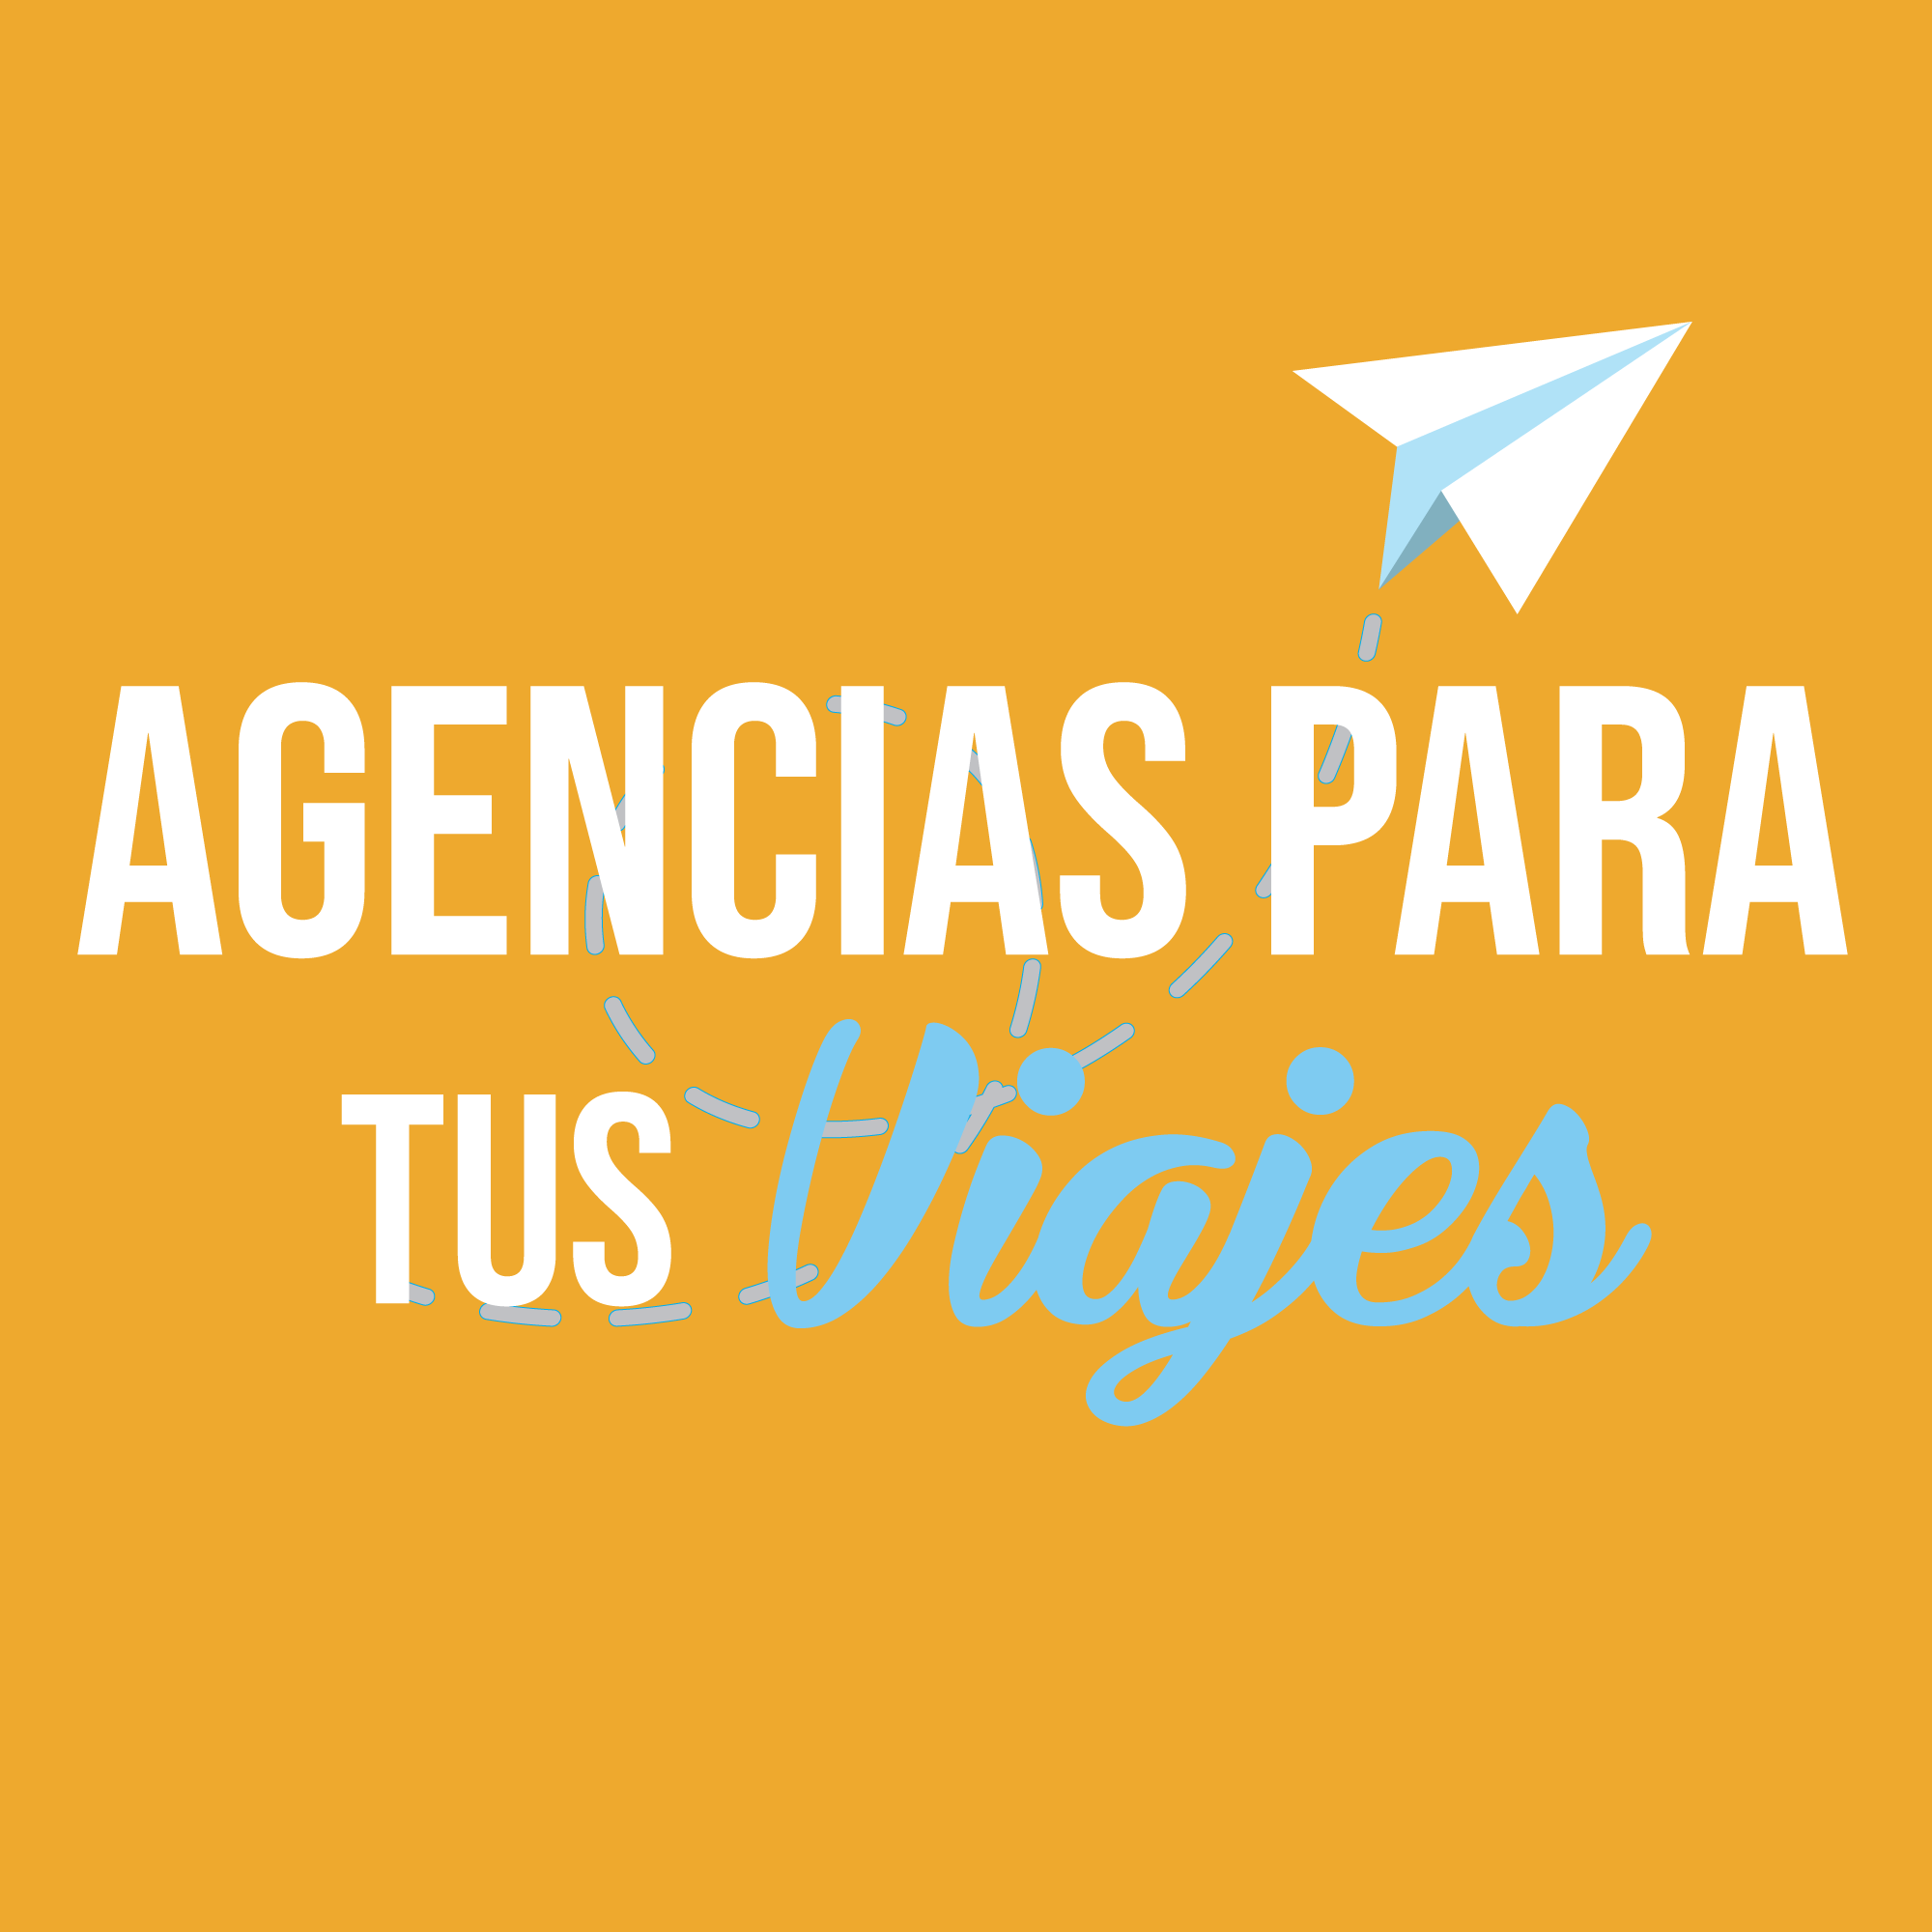 images/revista/Mini-Agencias-para-tus-viajes.png